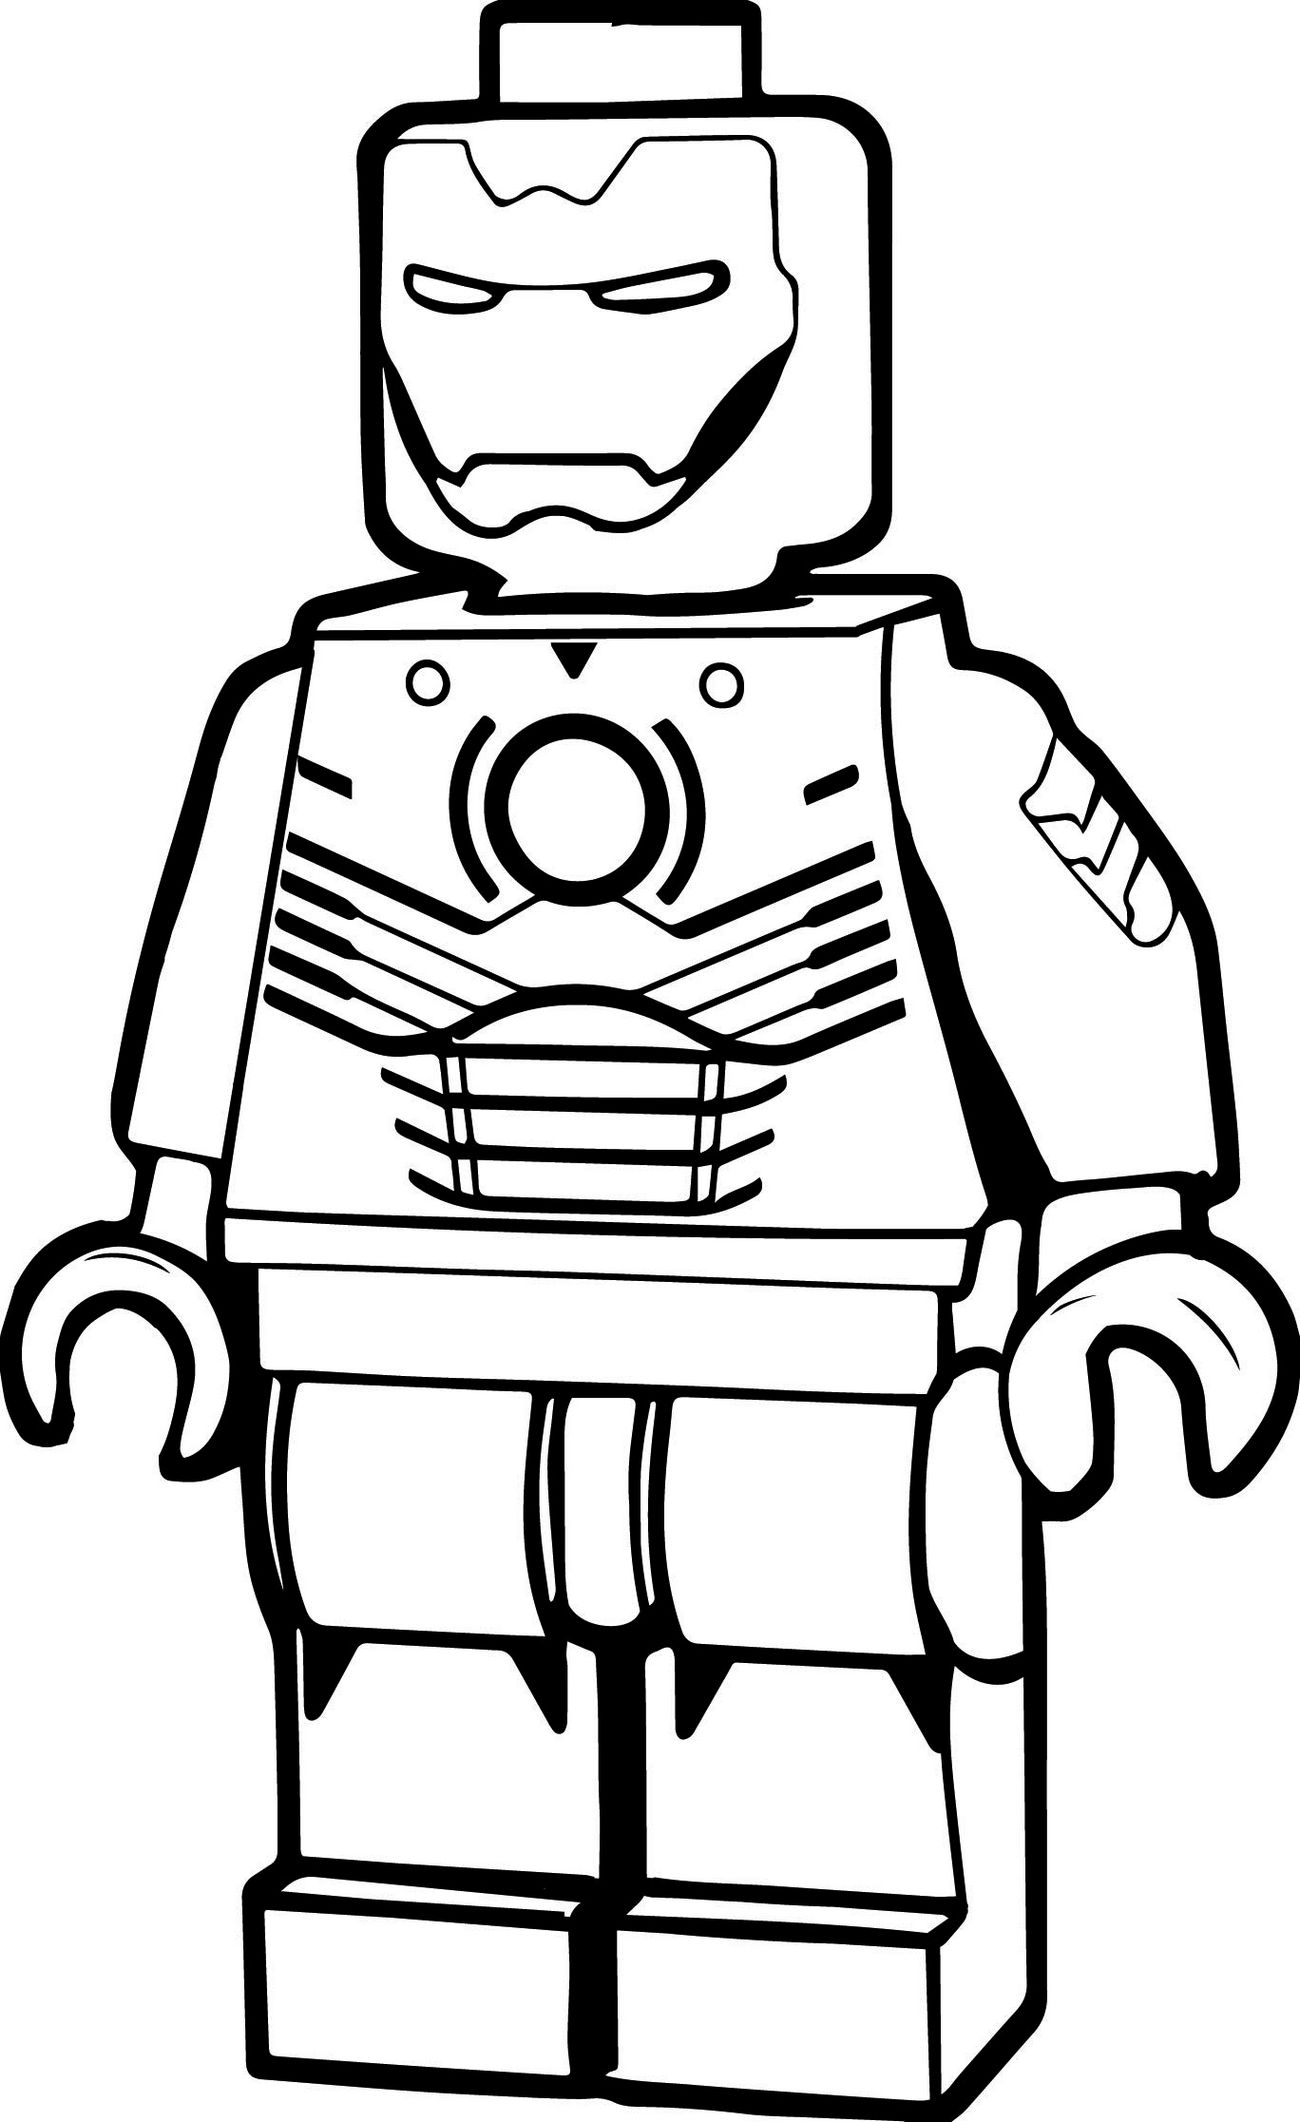 Lego-Iron-Man-Coloring-Illustrations